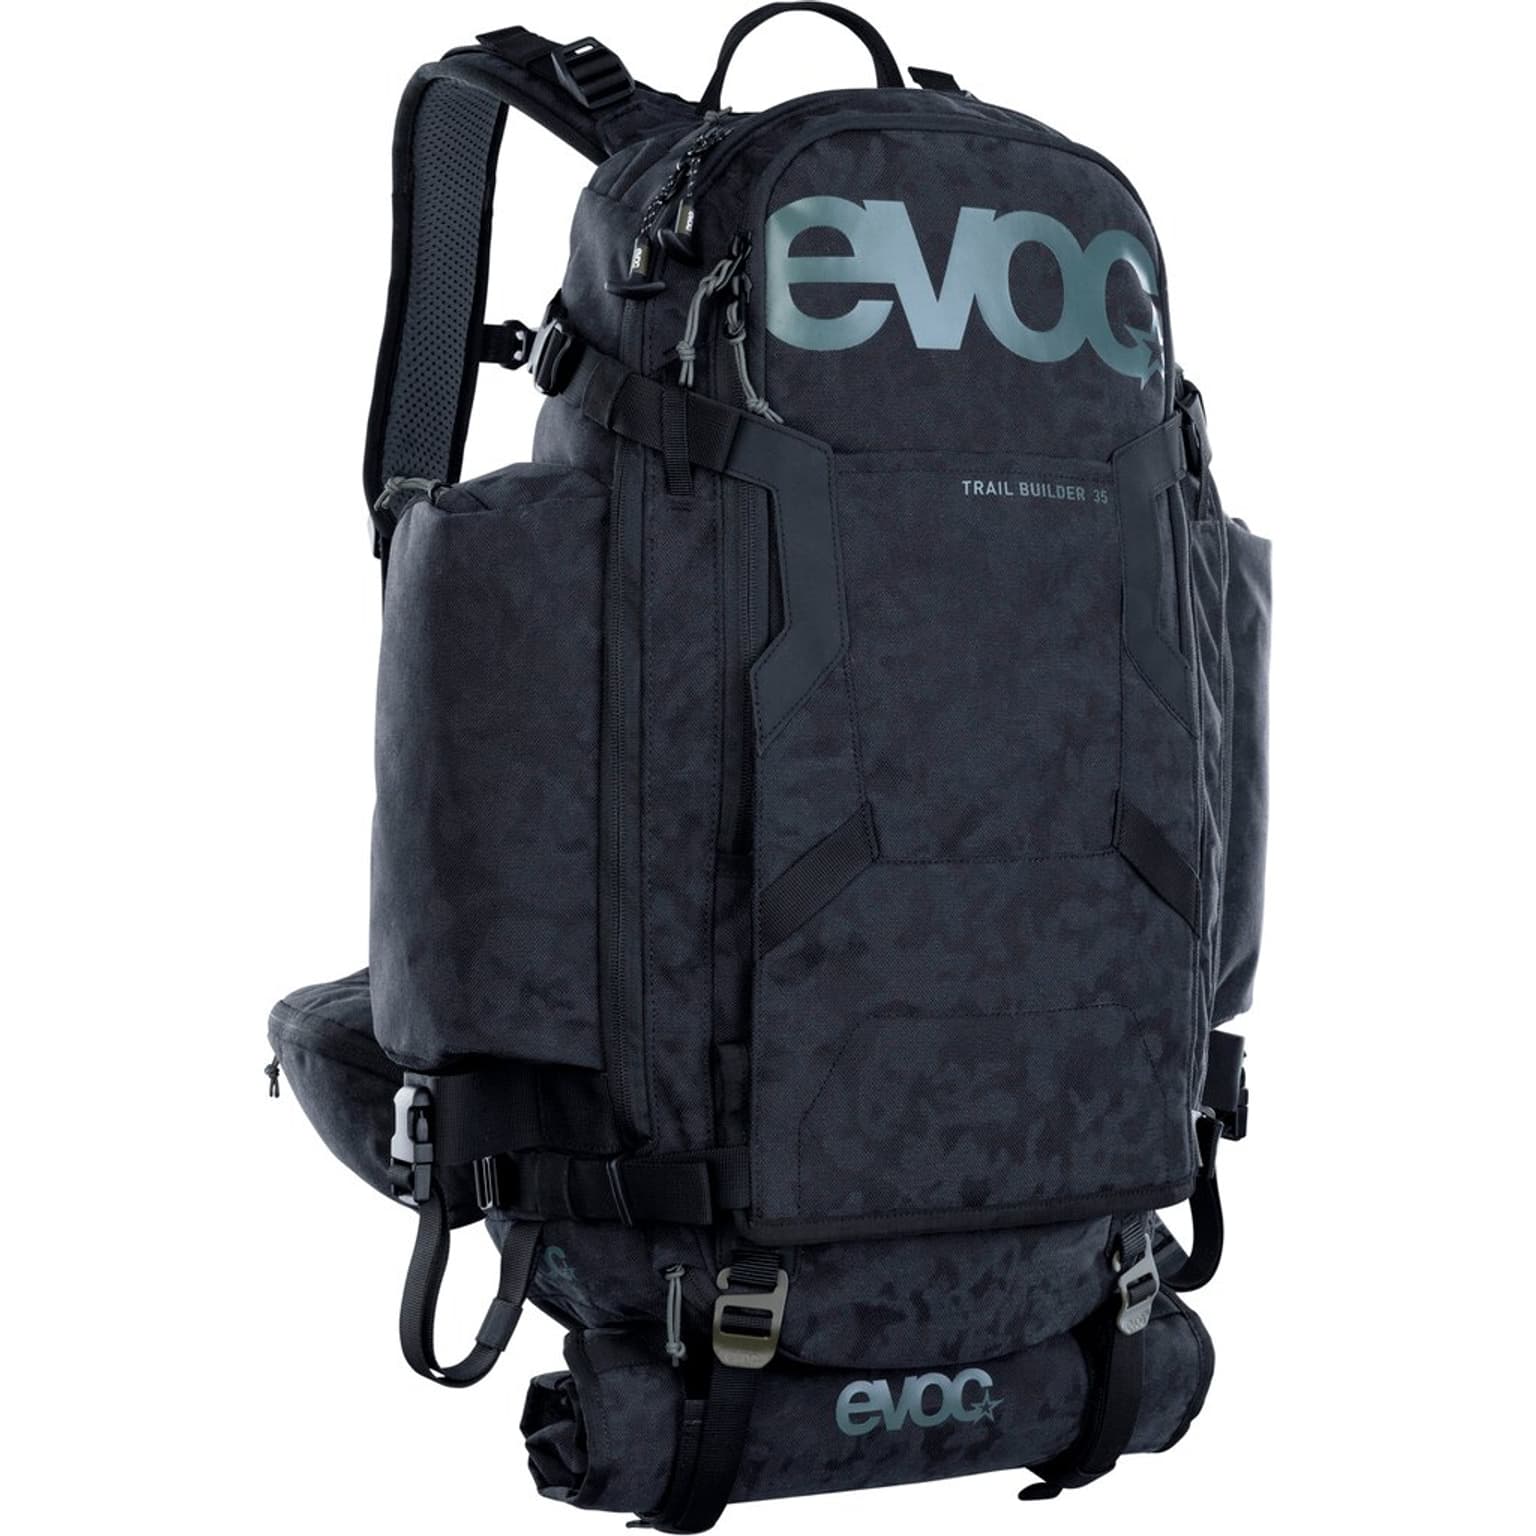 Evoc Evoc Trail Builder 35L Backpack Rucksack kohle 1